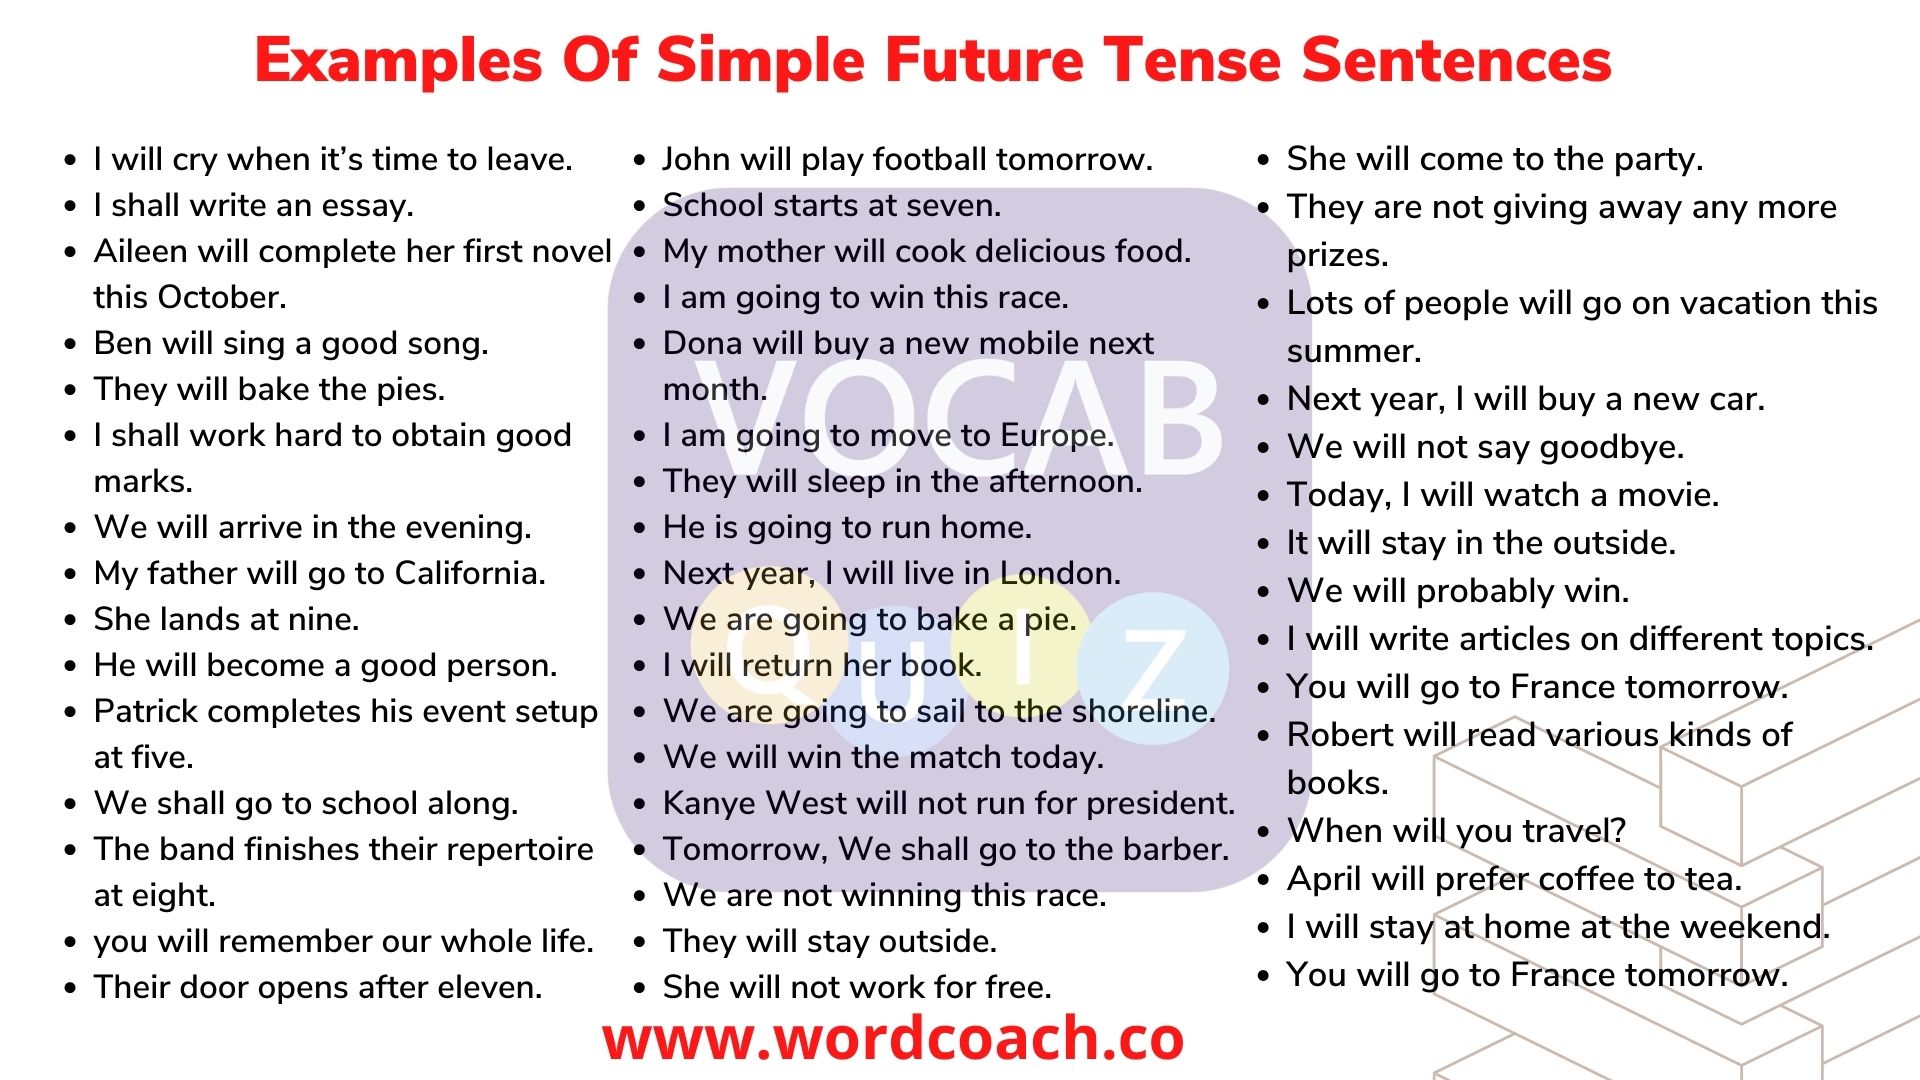 10-sentences-of-simple-future-tense-examples-example-sentences